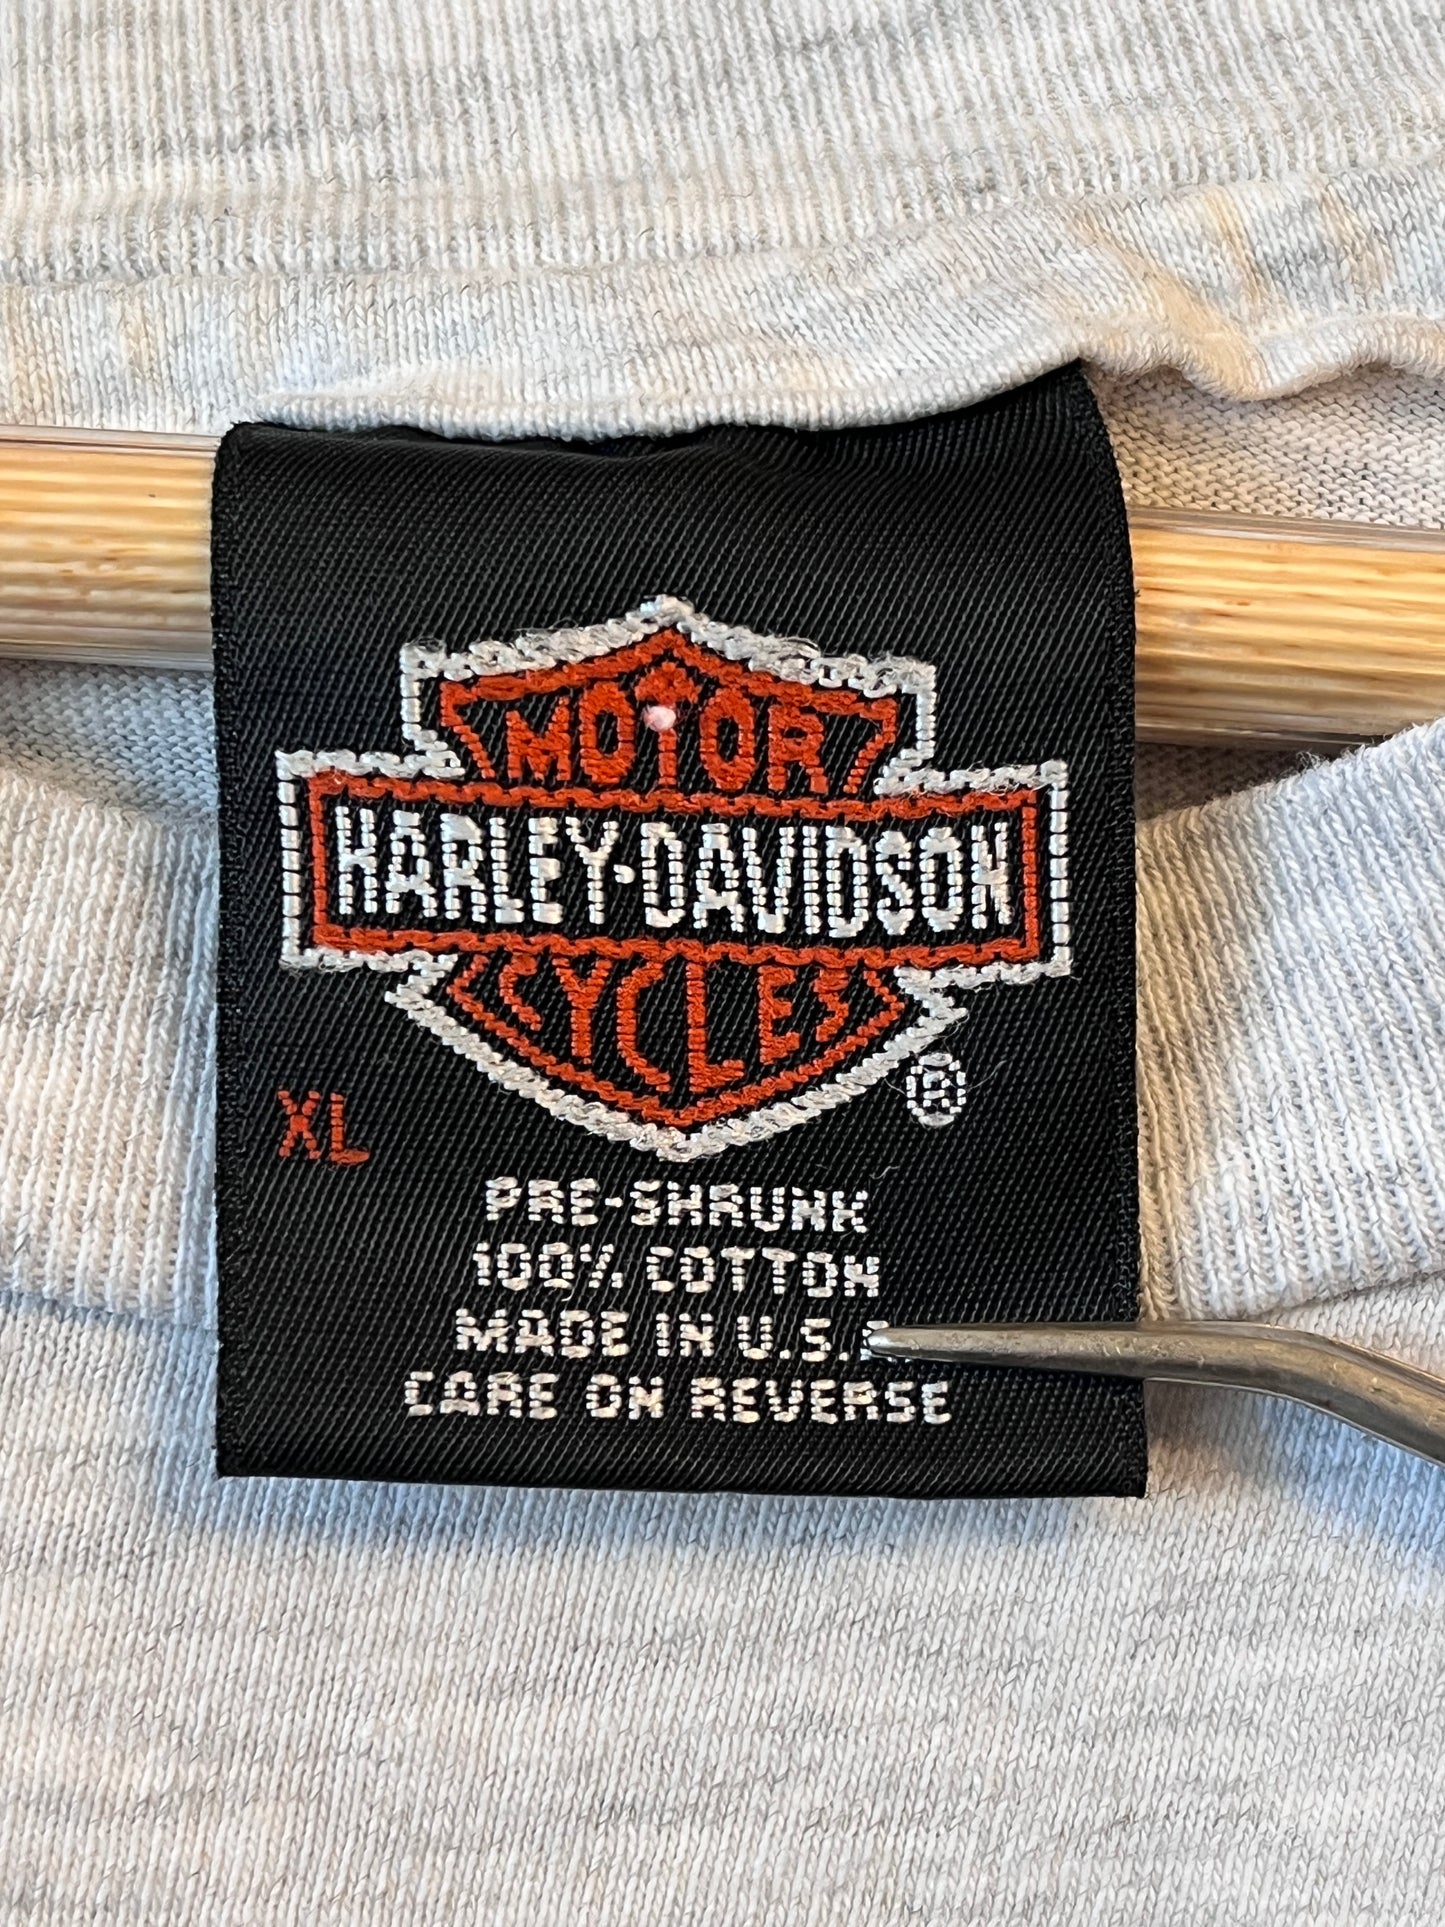 Harley Davidson breast pocket arrowhead t Chosa's '93